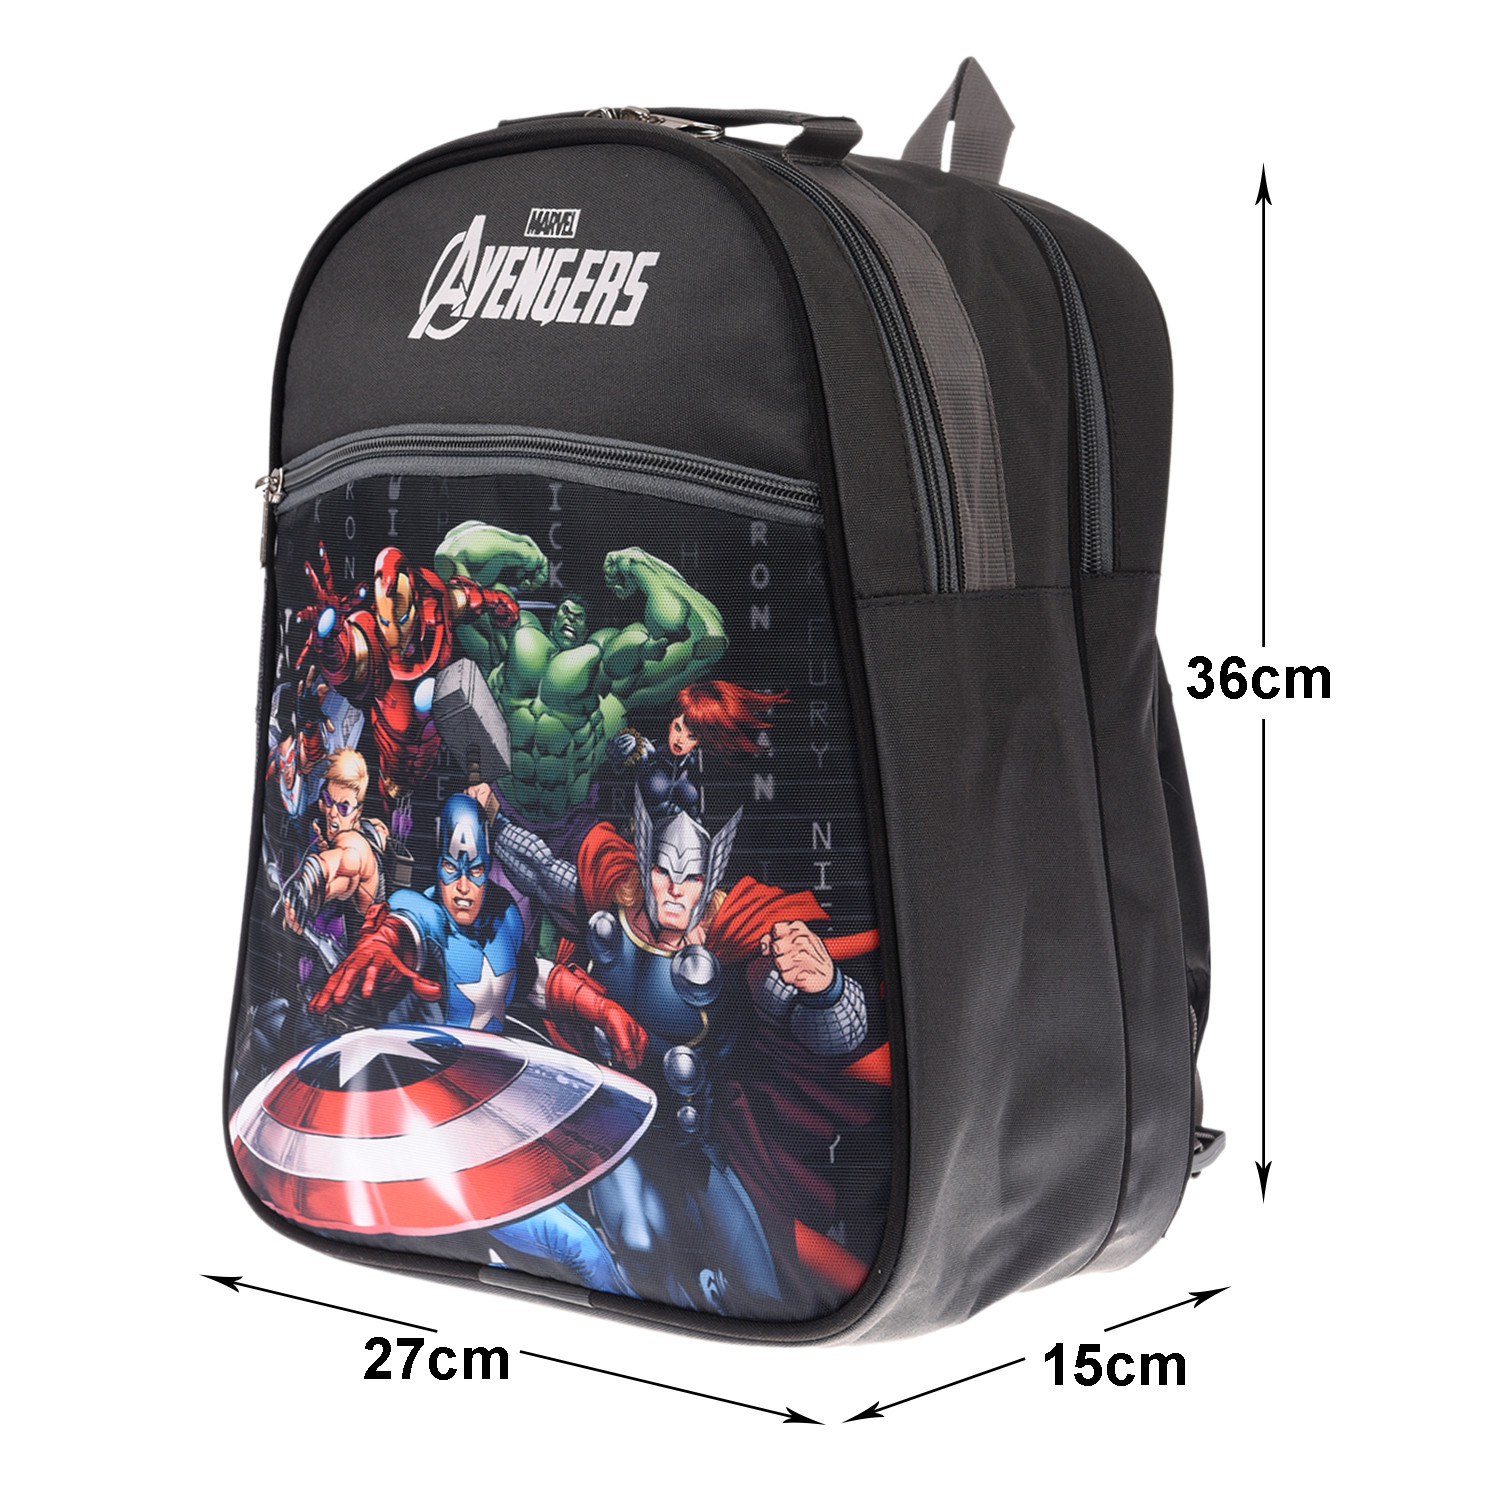 Kuber Industries Marvel Avengers School Bag|3 Compartment Rexine School Bagpack|School Bag for Kids|School Bags for Girls with Zipper Closure (Gray)